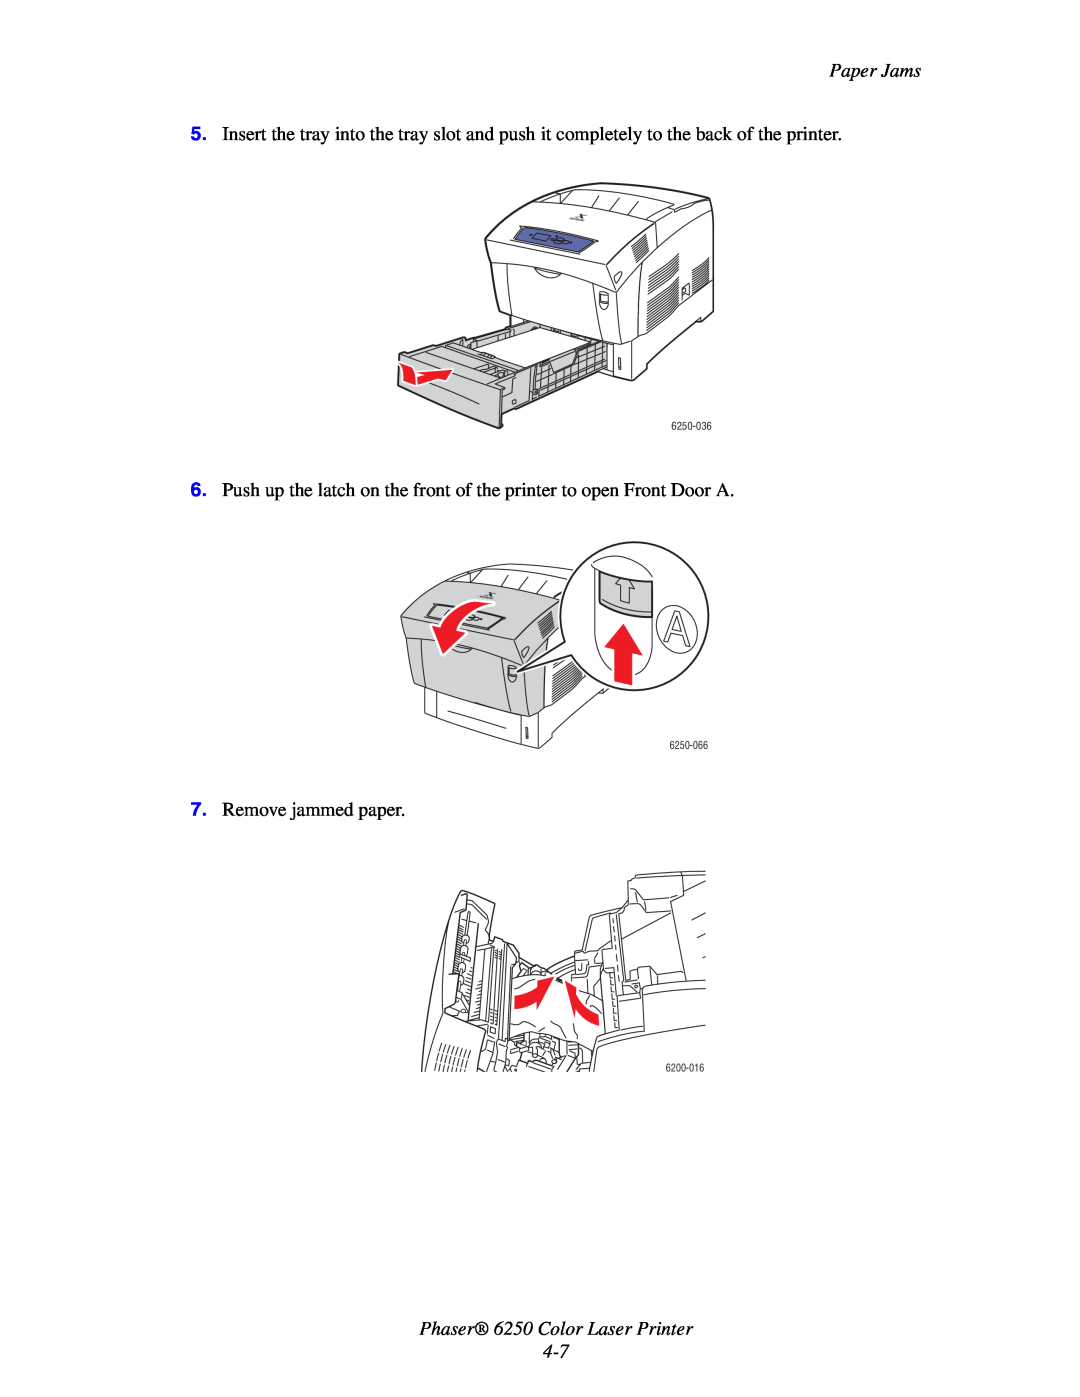 Xerox manual Phaser 6250 Color Laser Printer 4-7, Paper Jams, 6250-036, 6250-066, 6200-016 